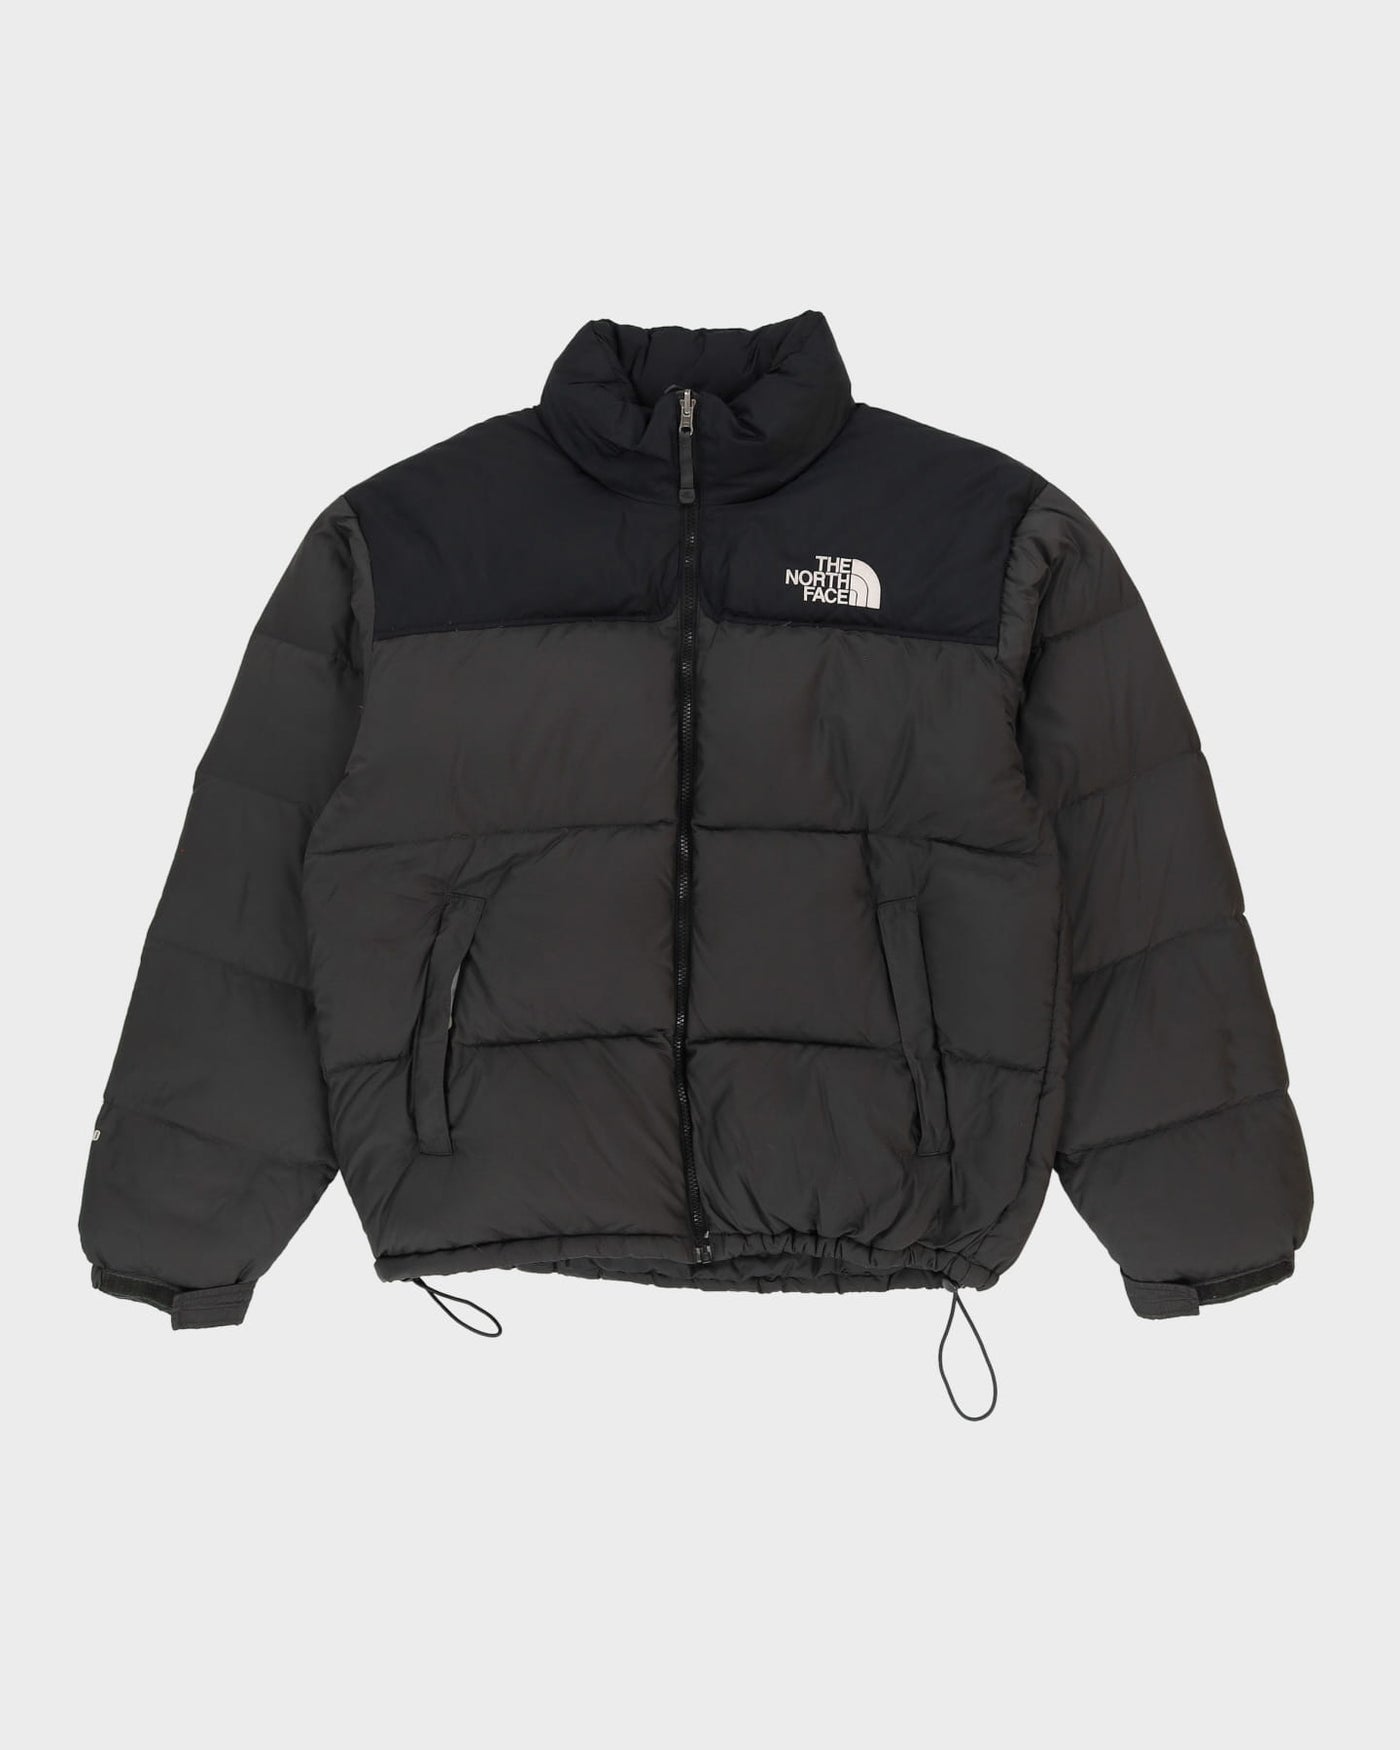 The North Face Dark Grey / Black Nupste 700 Puffer Jacket - L